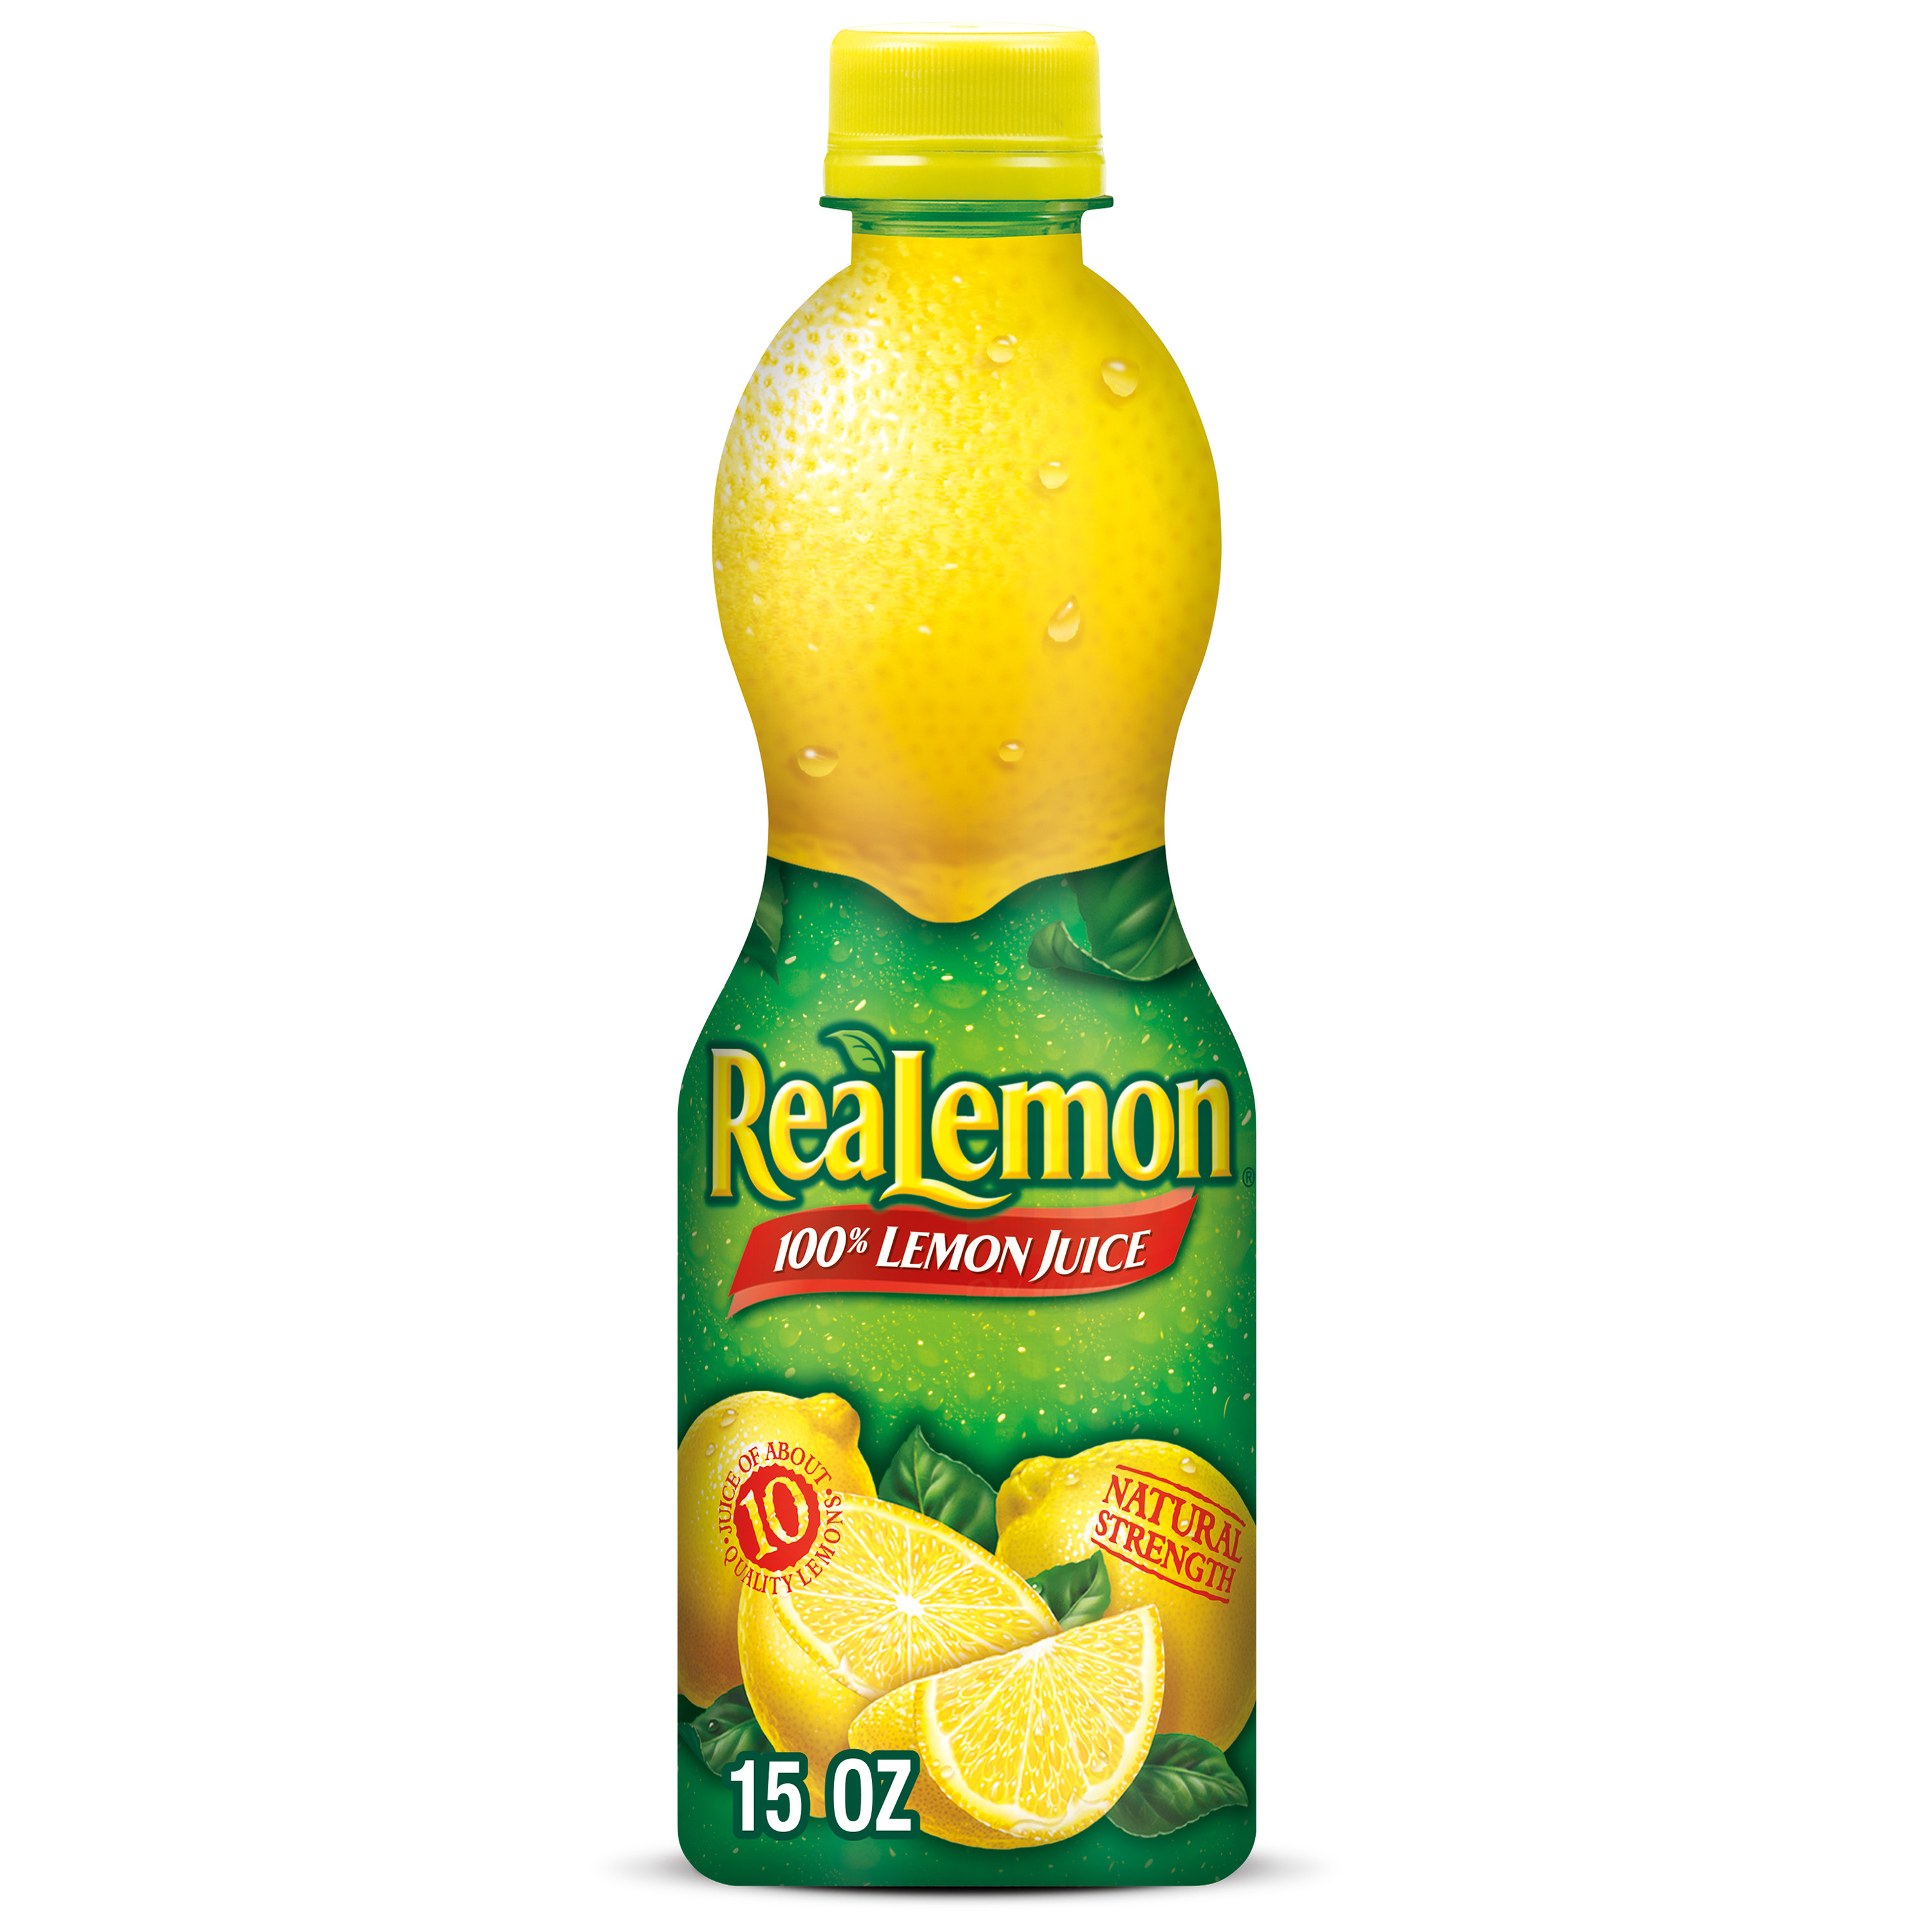 ReaLemon 100% Lemon Juice, 15 fl oz bottle - image 1 of 7